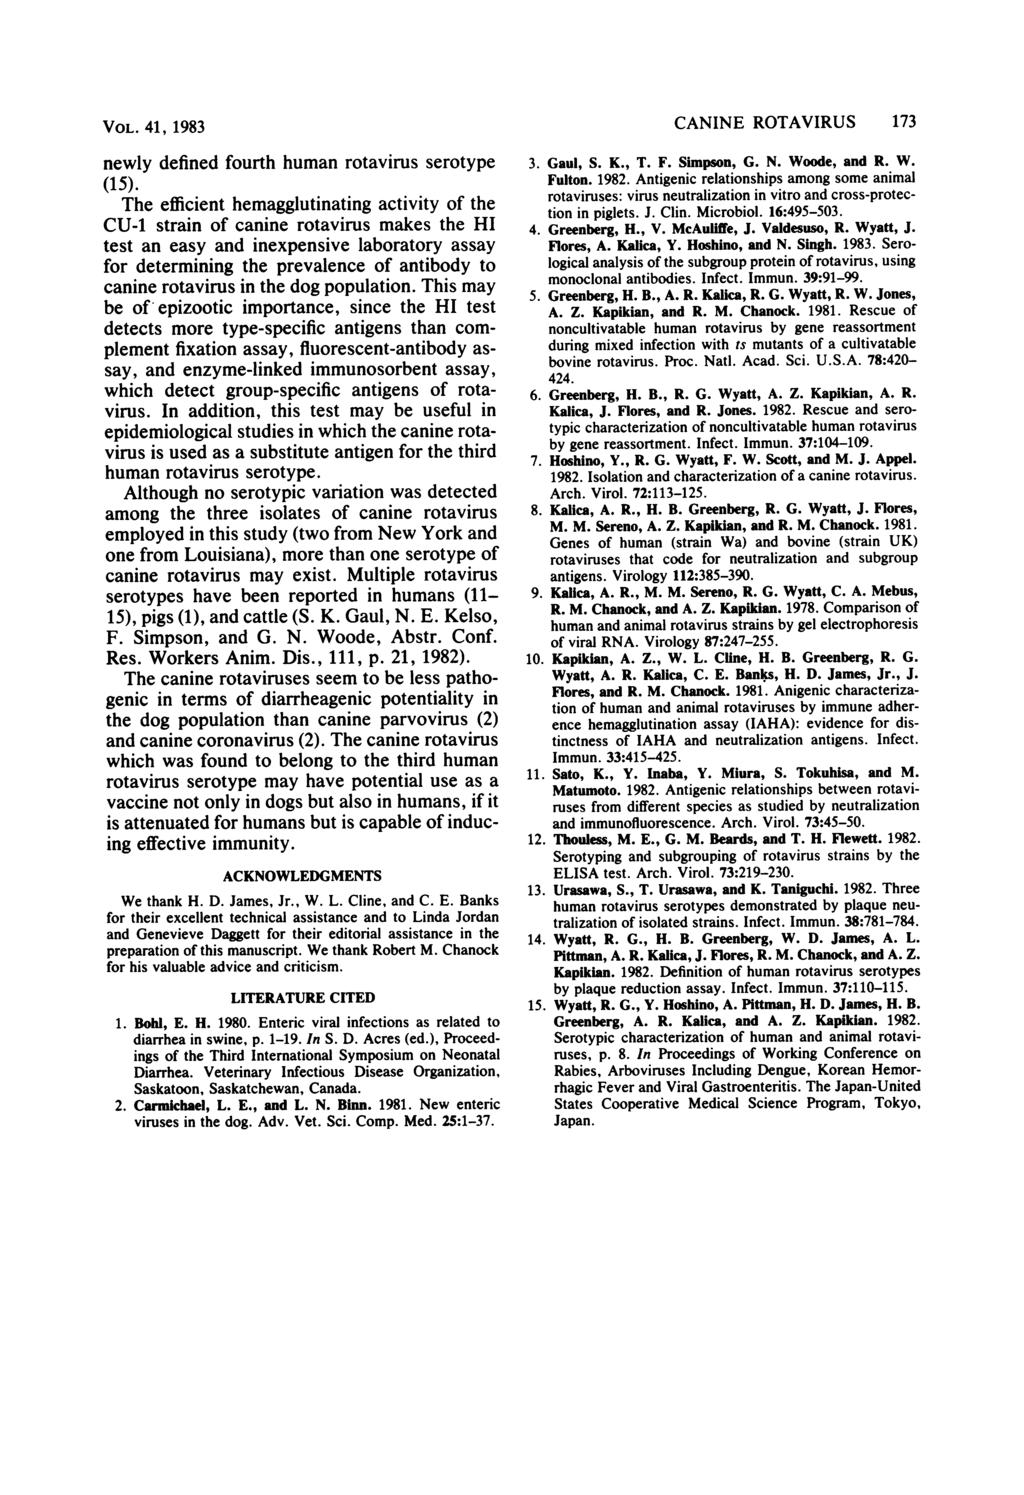 VOL. 41, 1983 newly defined fourth human rotavirus serotype (15).